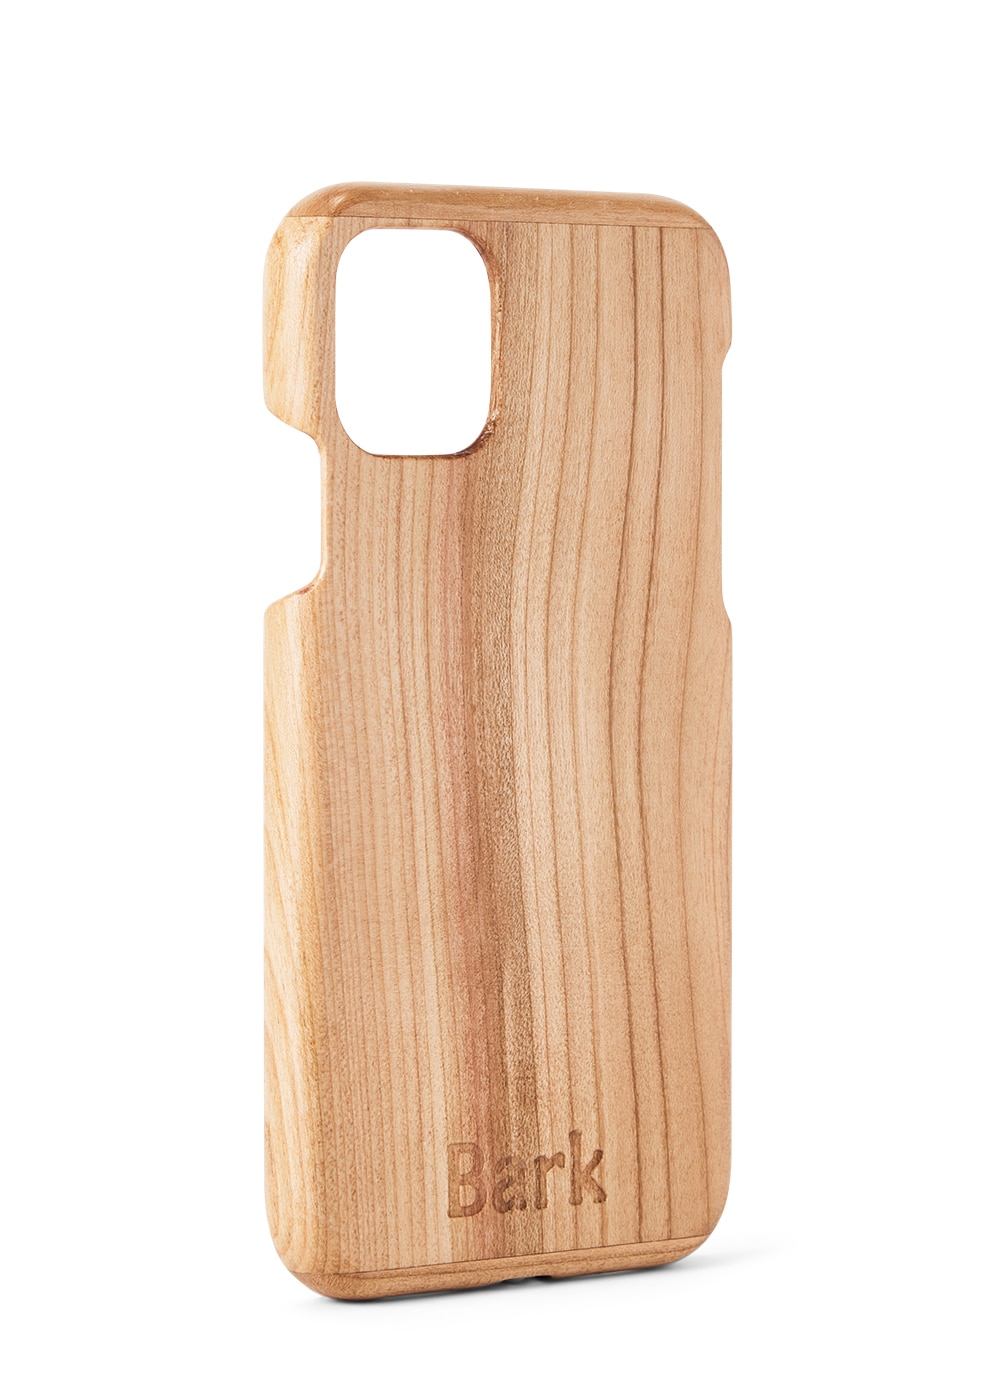 iPhone 11 coque en bois de feuillus suédois - Körsbär